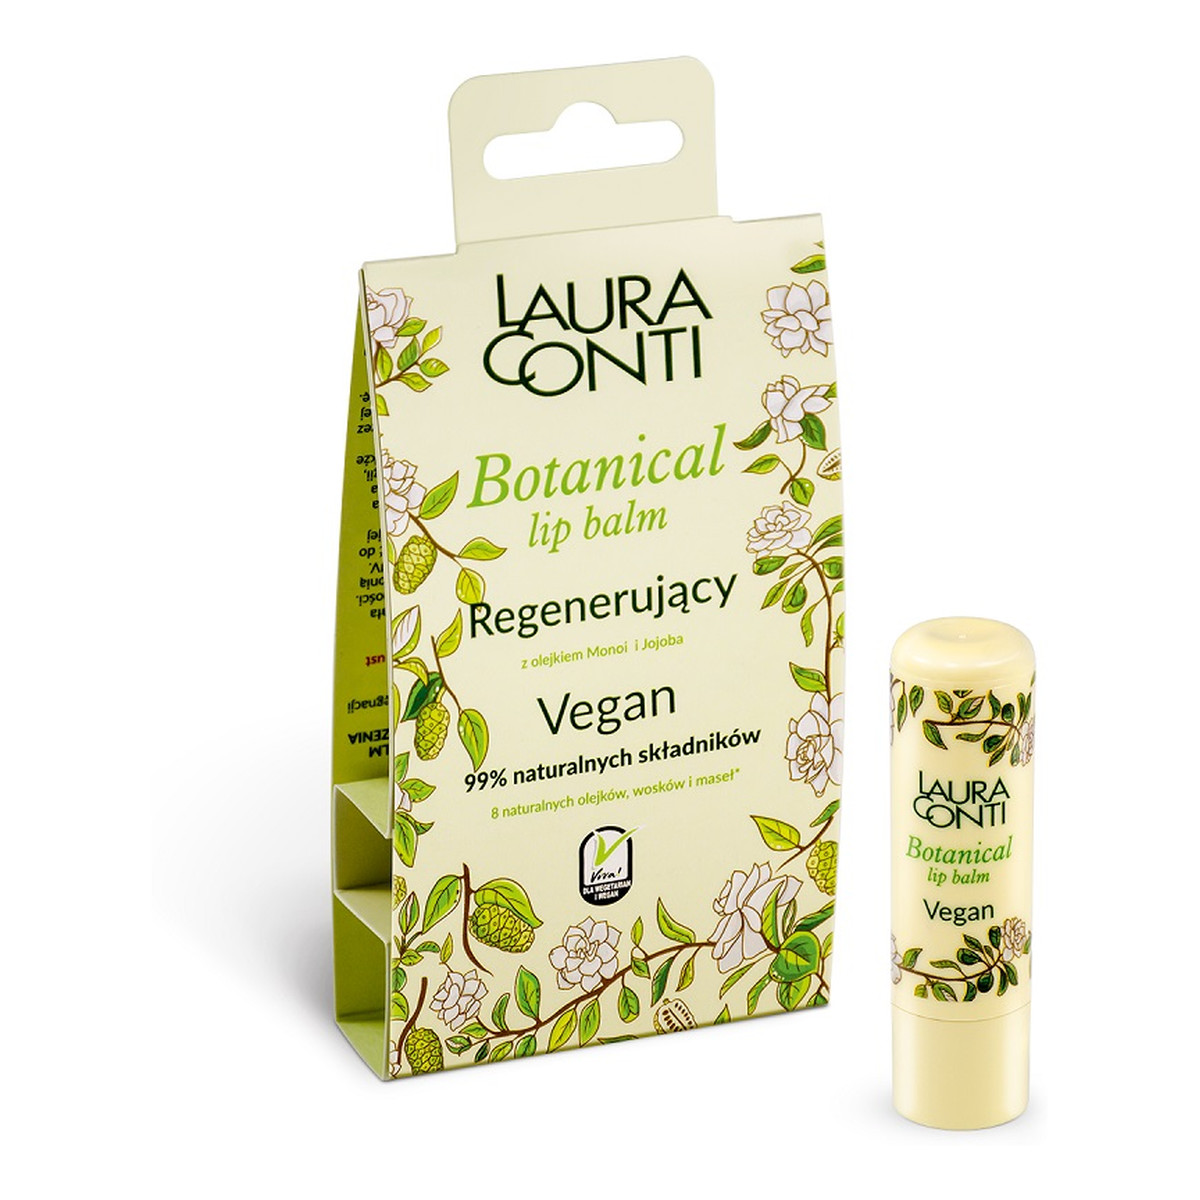 Laura Conti Botanical regenerujący Balsam do ust 4,8 g 4.8g